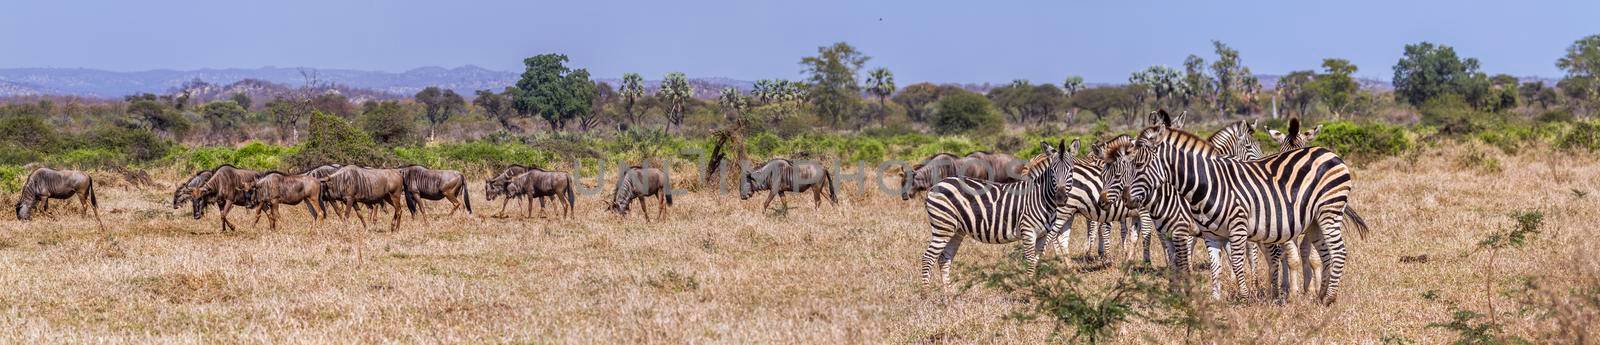 Plains zebra  and Blue wildebeest in Kruger National park, South Africa ; Specie Equus quagga burchellii and Connochaetes taurinus